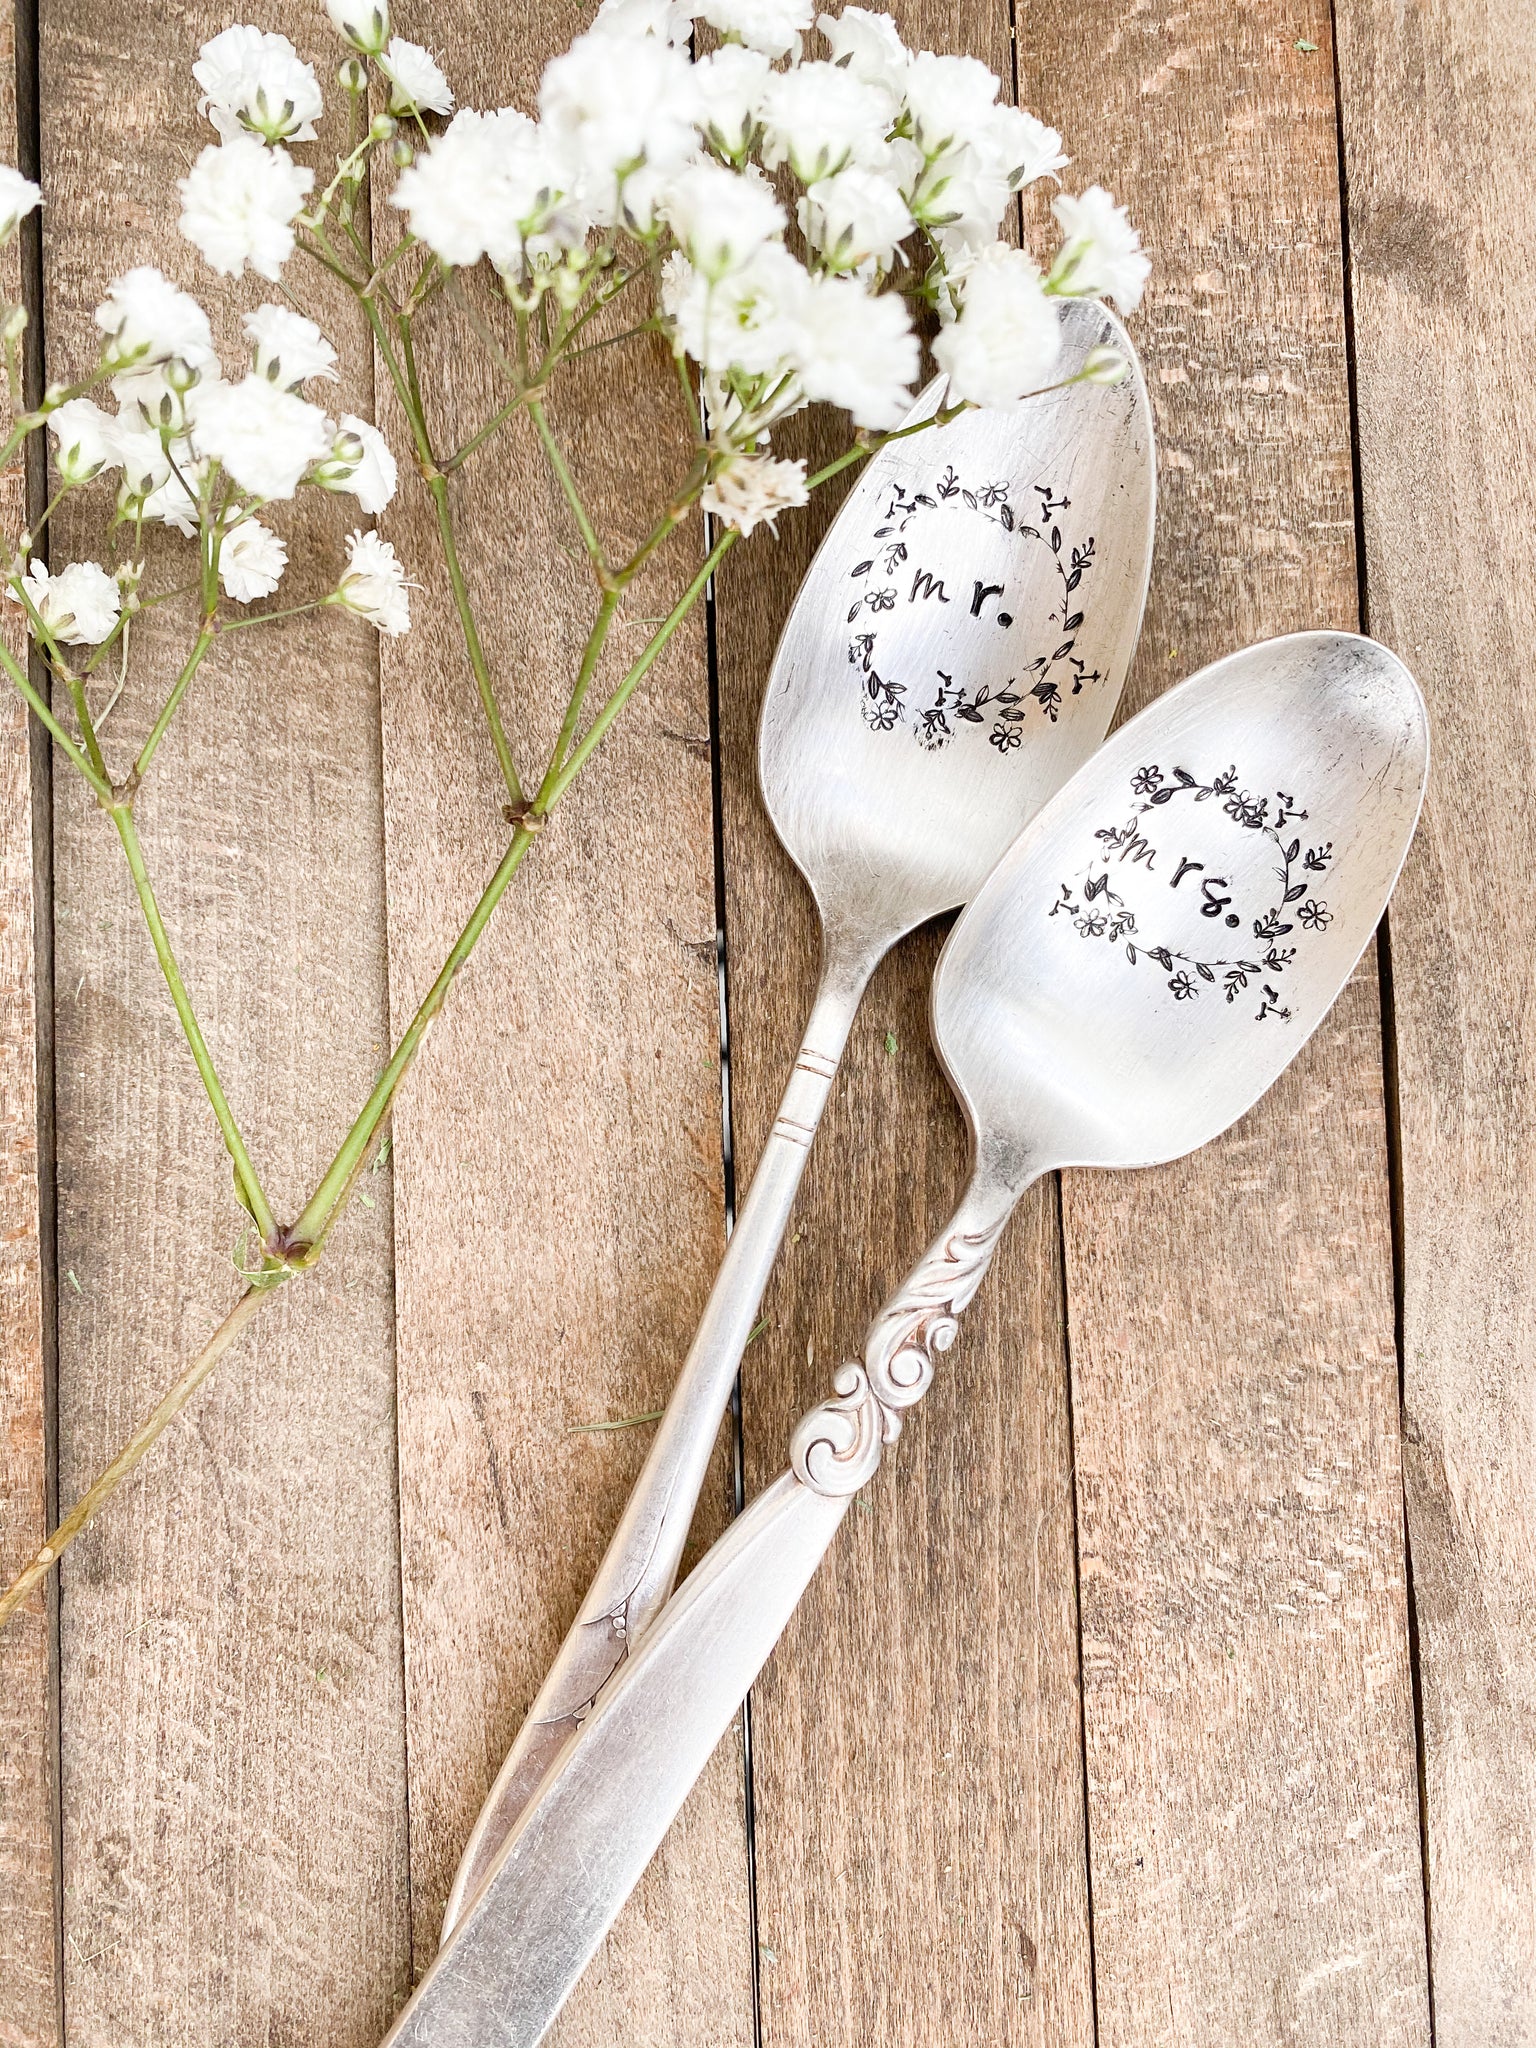 Mr & Mrs Vintage Wedding Spoons